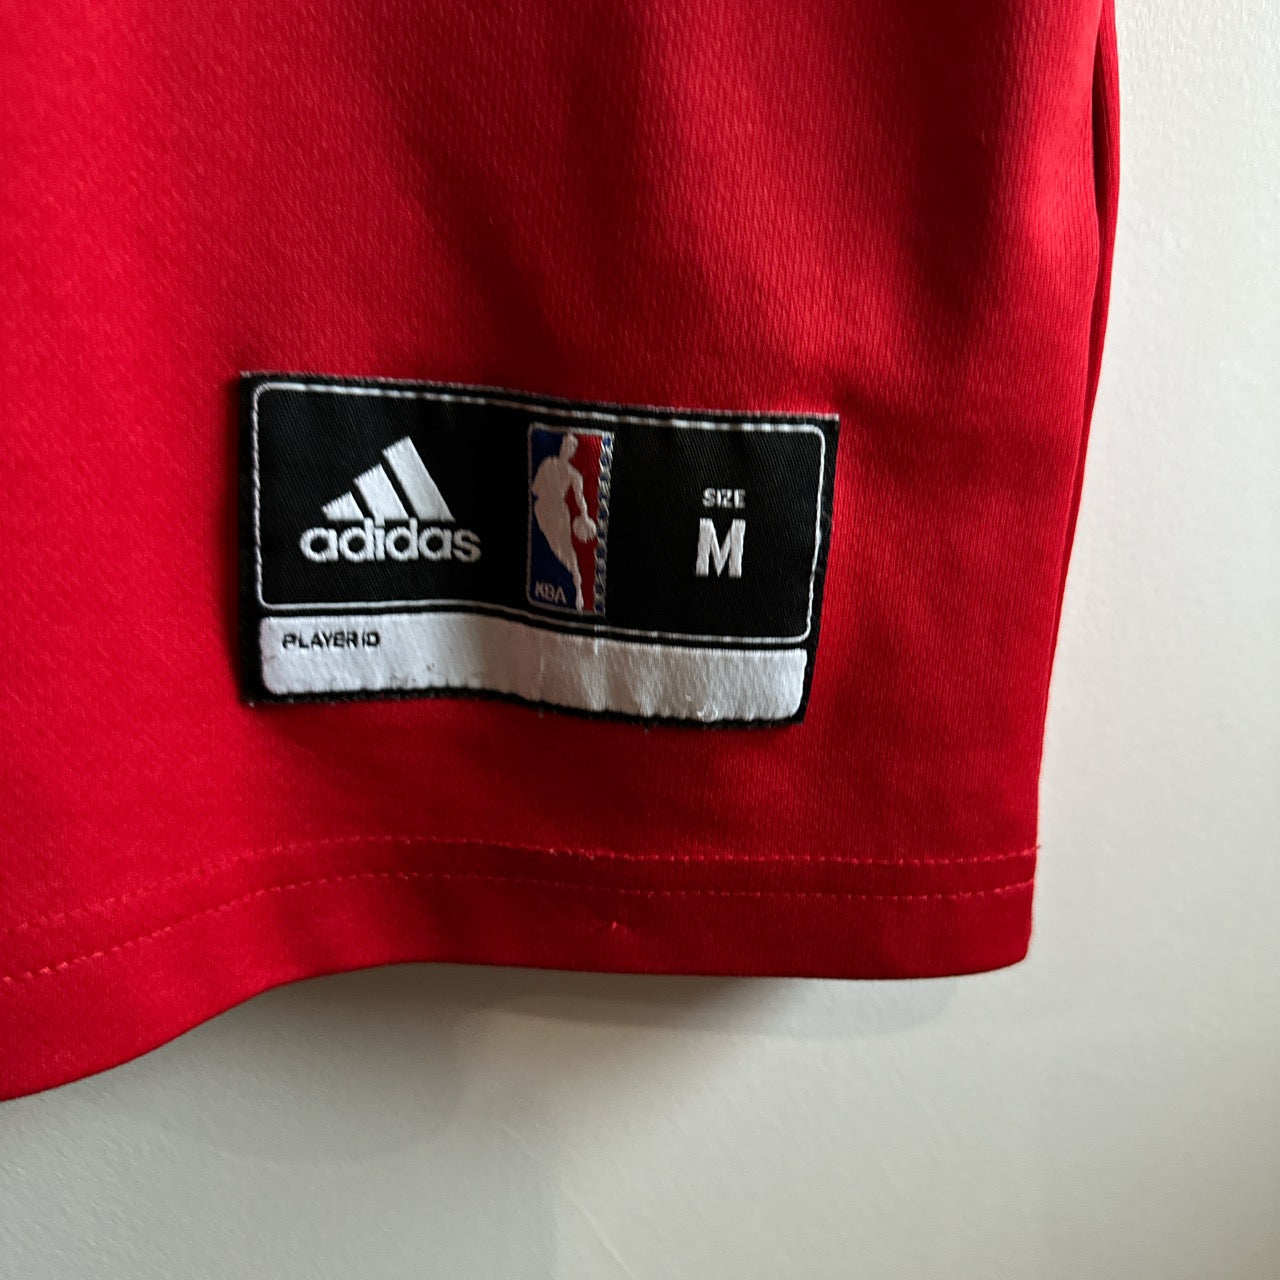 Chicago Bulls Derrick Rose Adidas jersey - Small